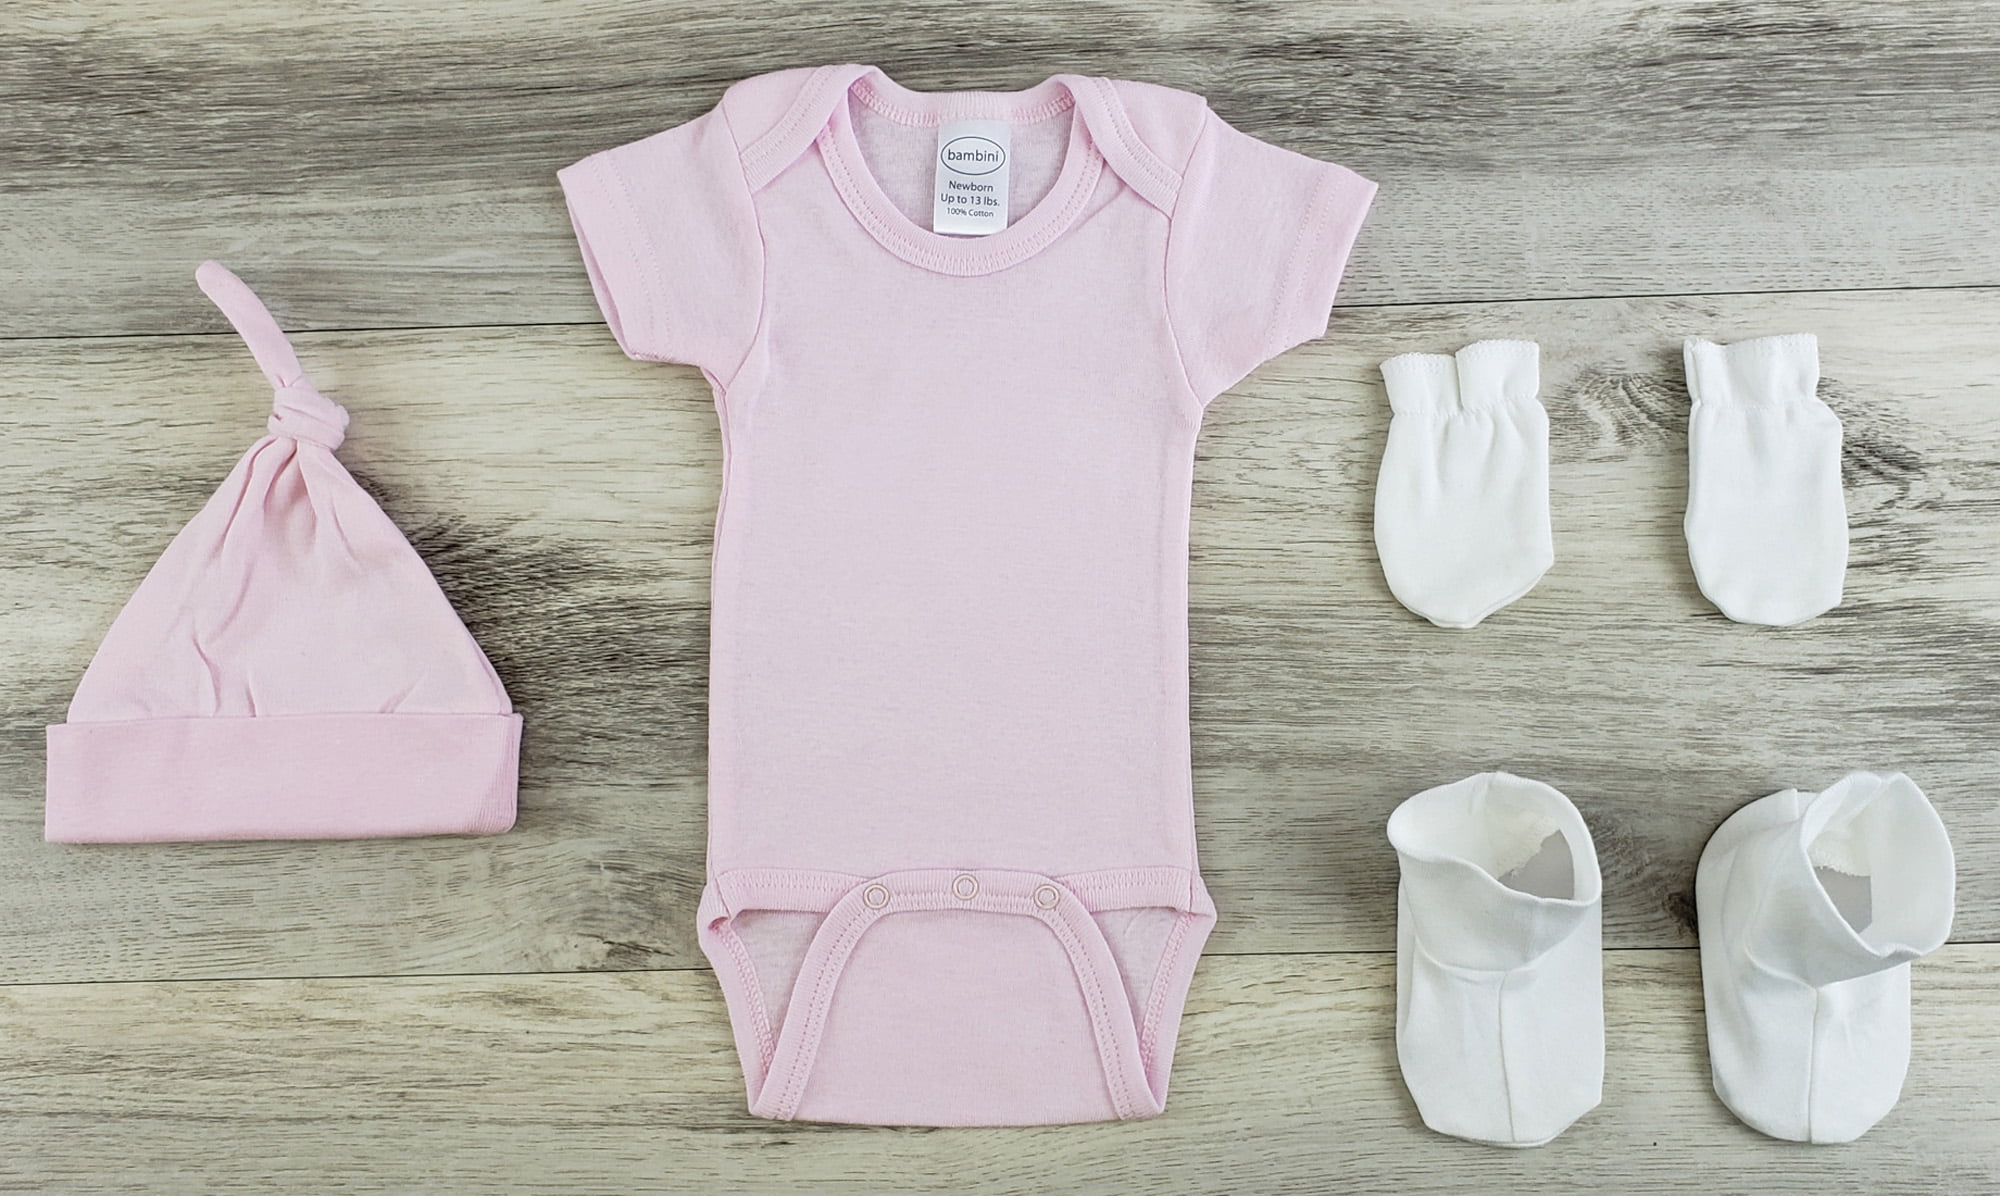 Bambini 5 Pc Layette Baby Clothes Set - Walmart.com